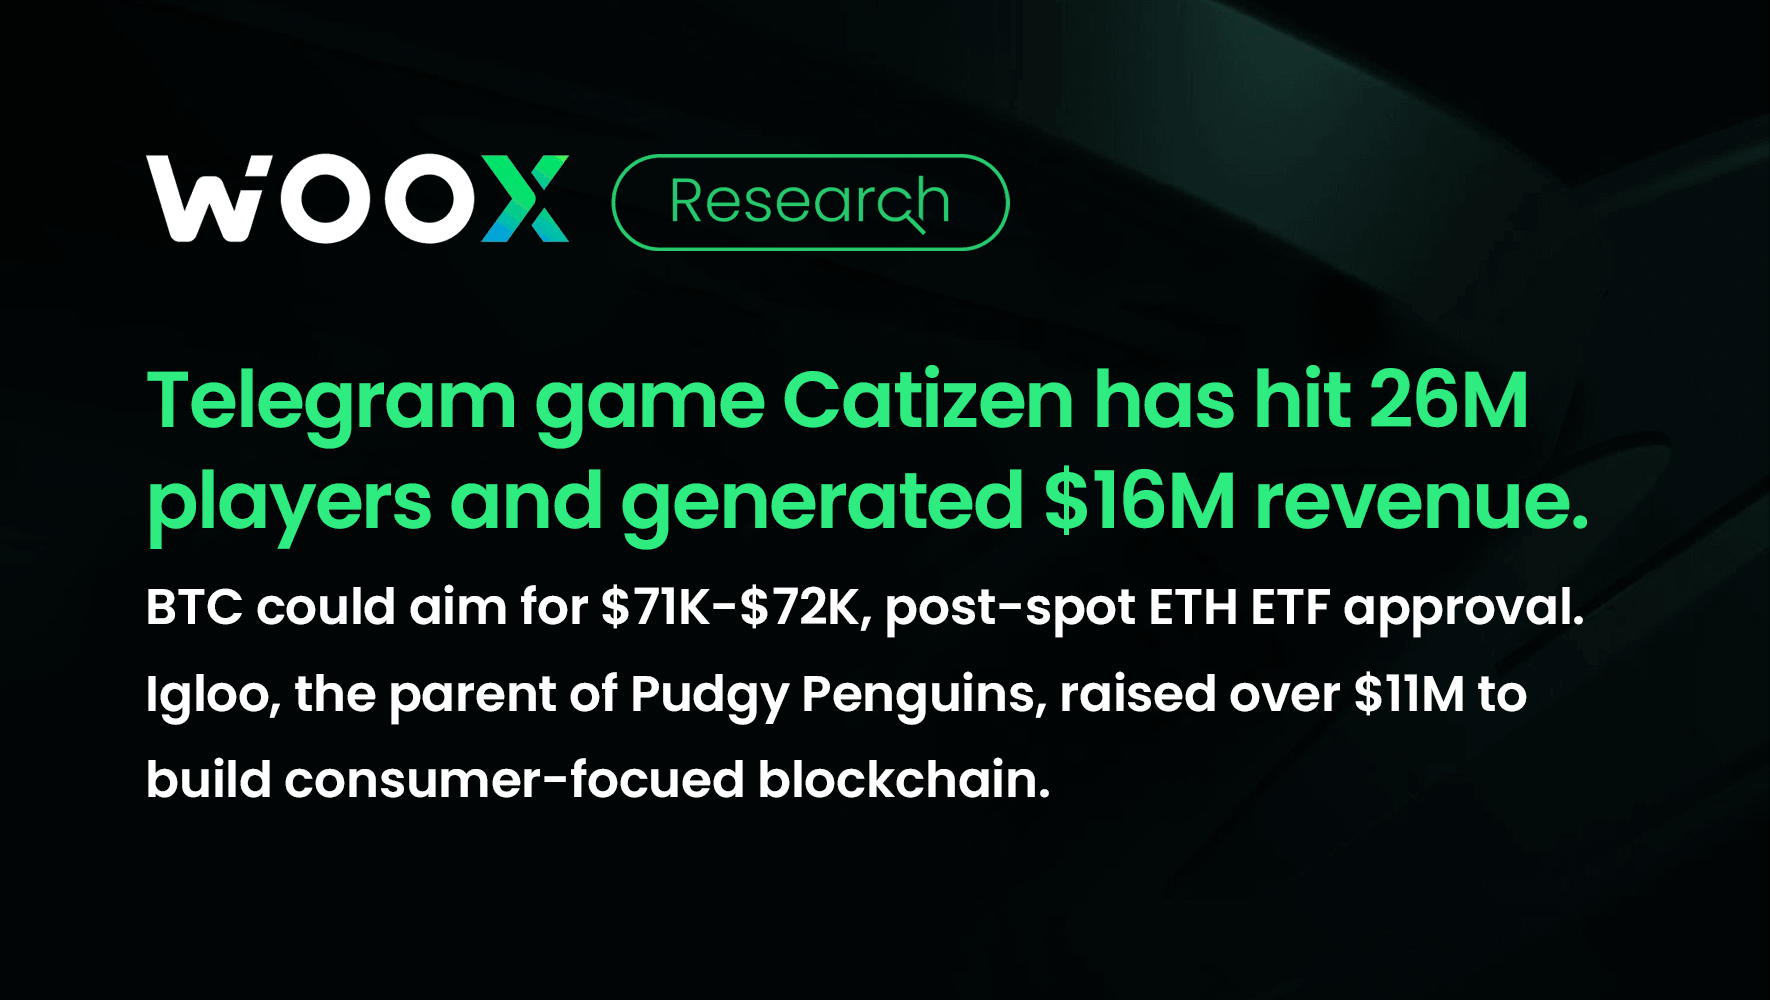 Telegram game Catizen has hit 26M players and generated $16M in revenue